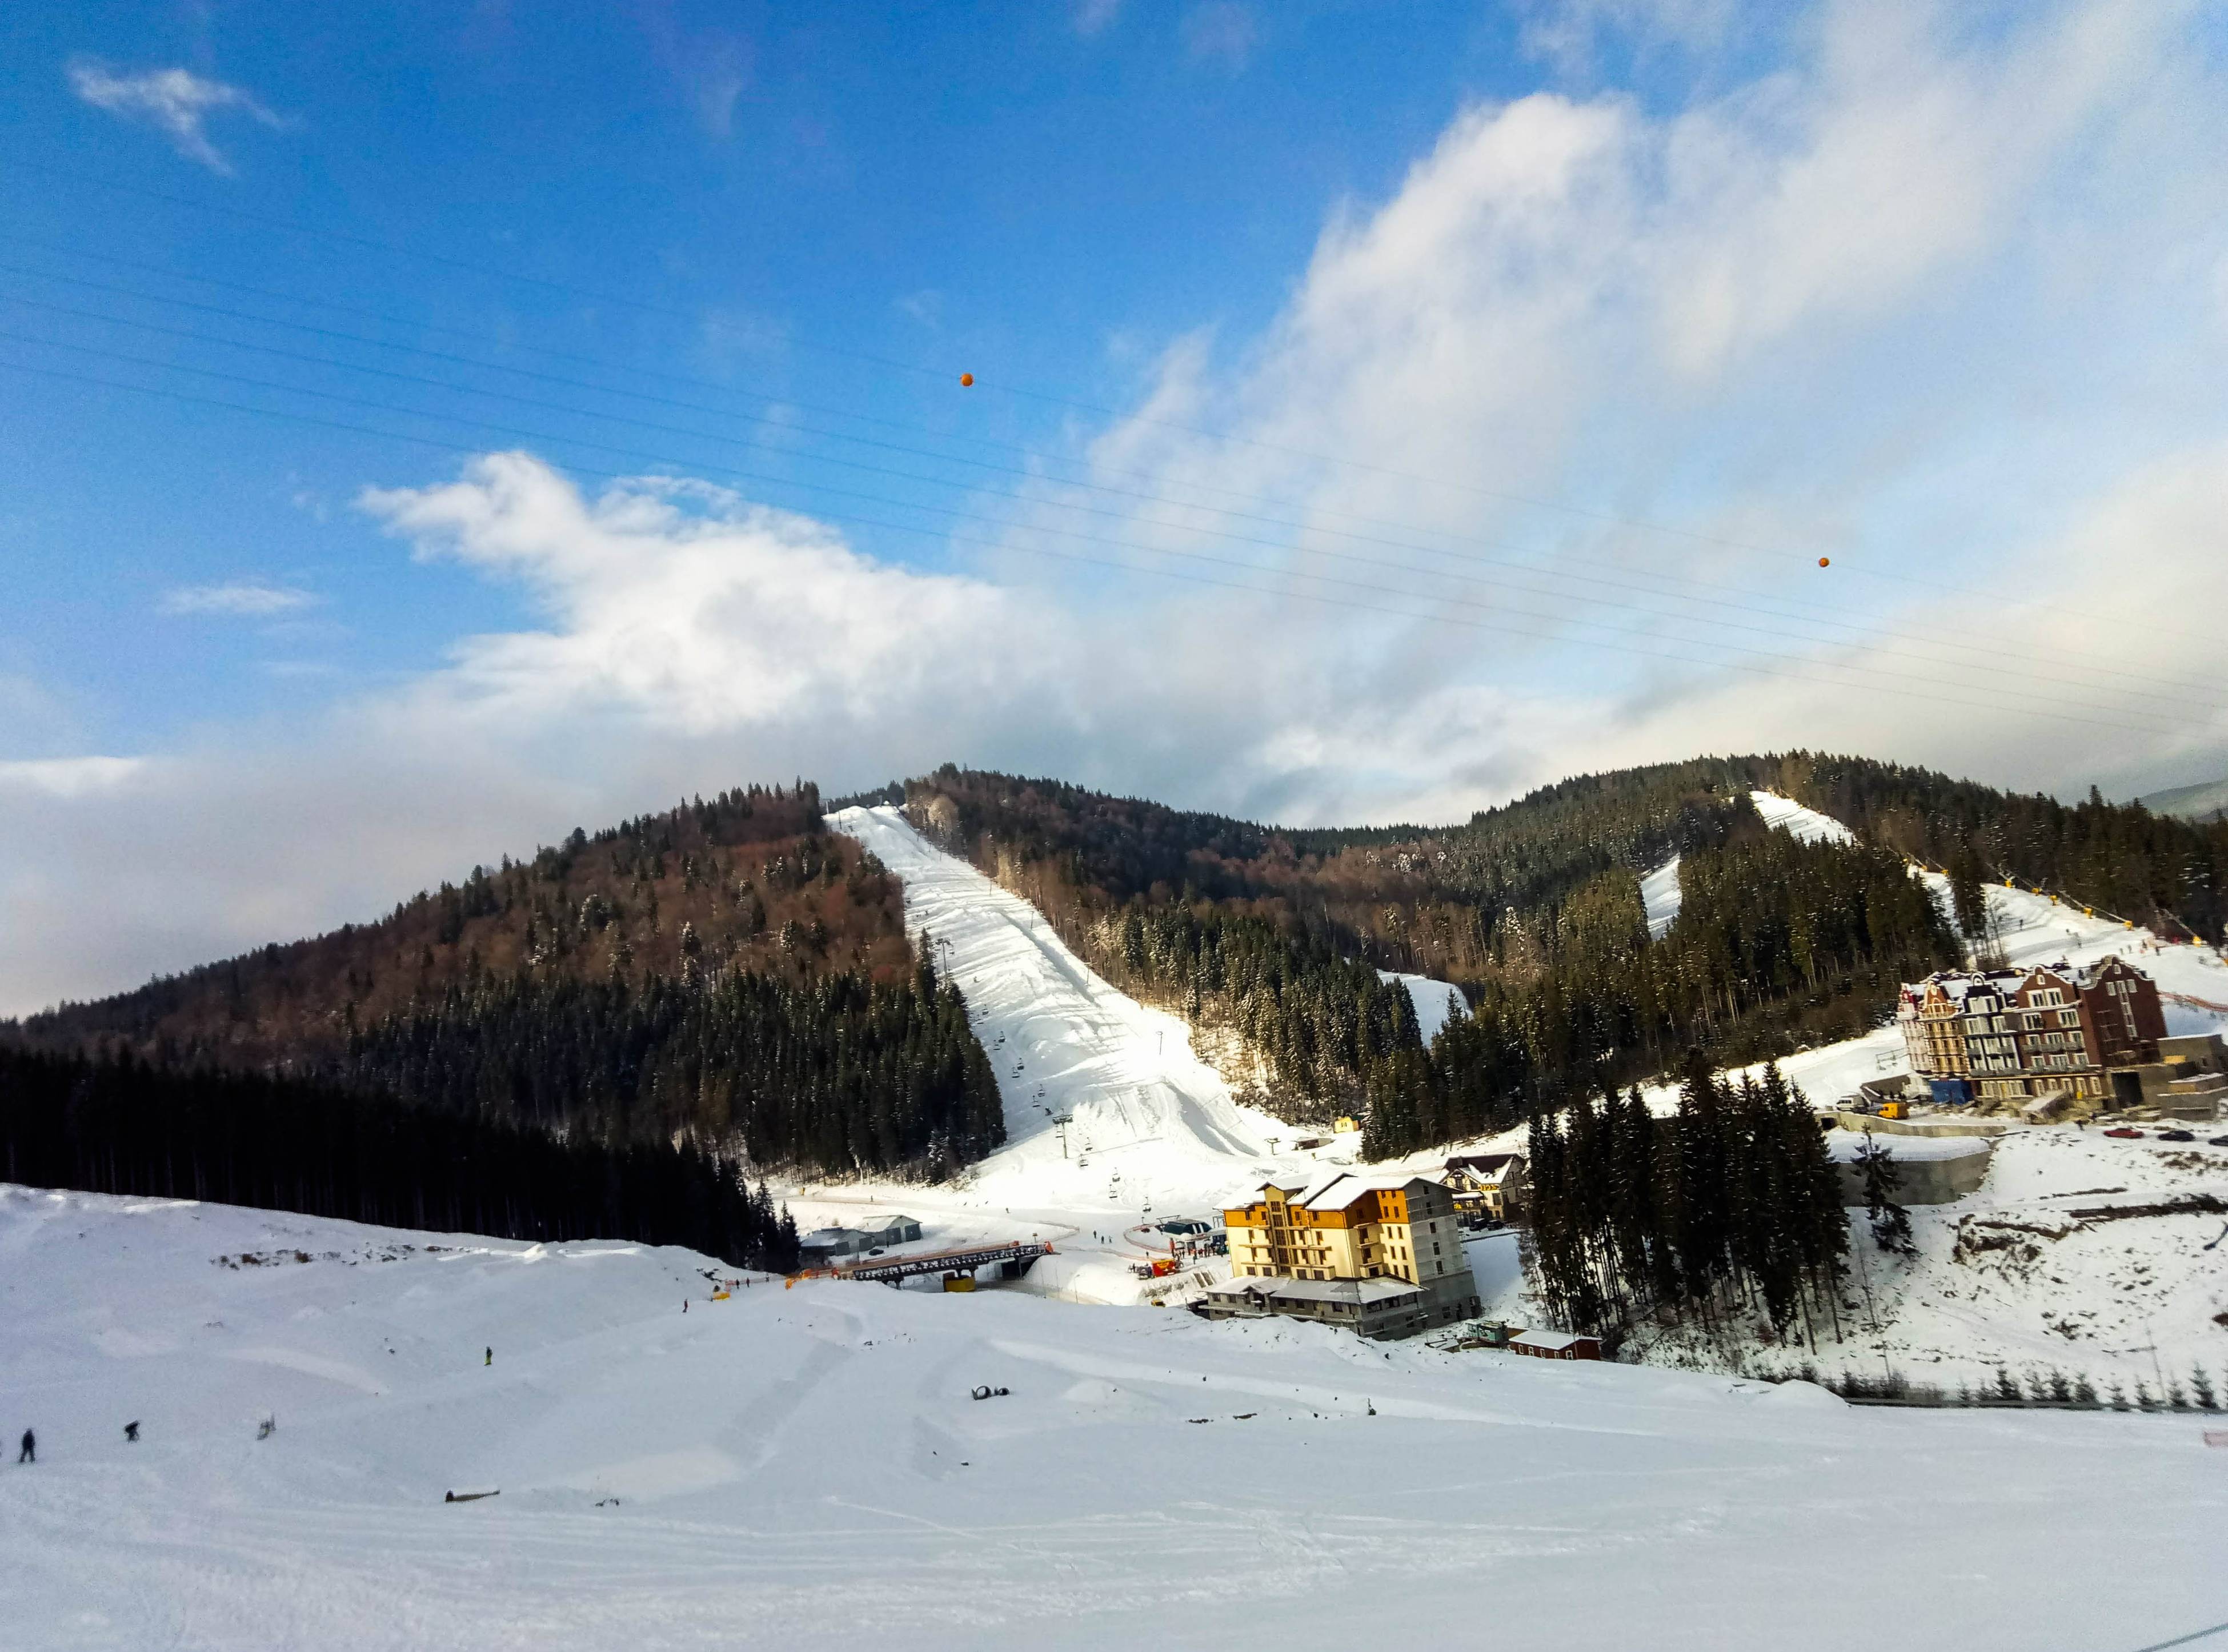 My trip to the ski resort Bukovel